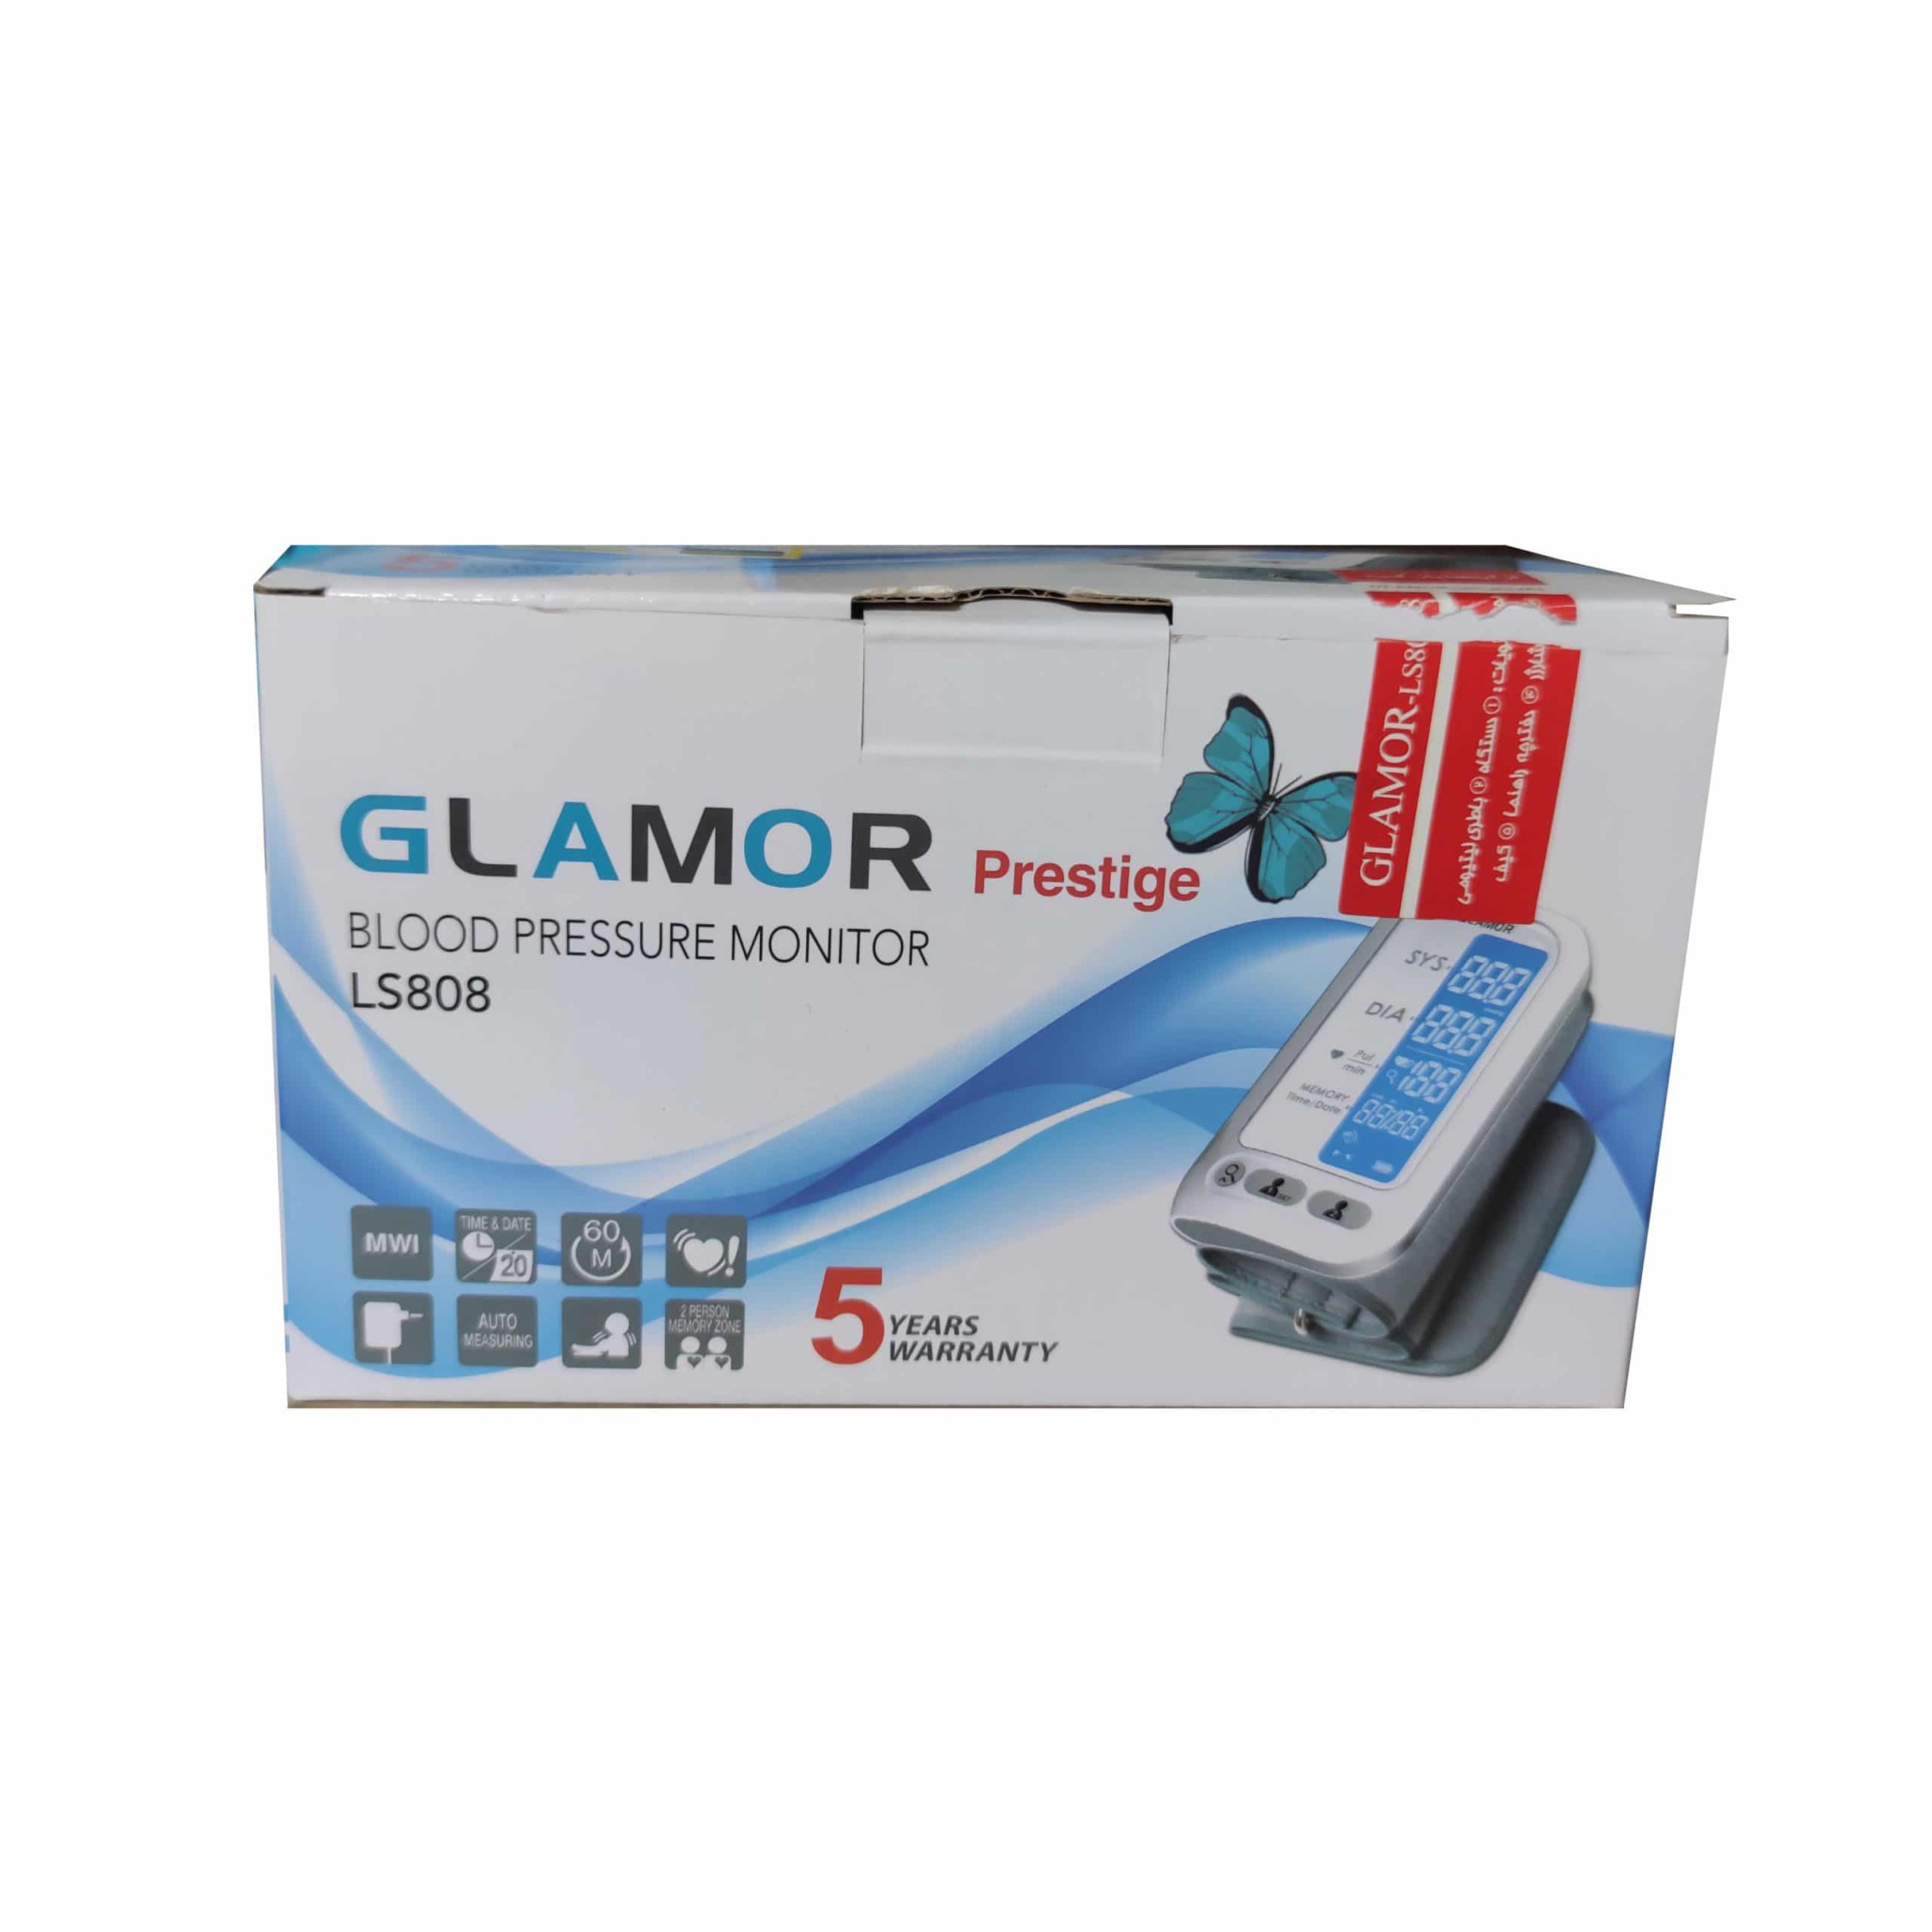  فشارسنج دیجیتال گلامور (GLAMOR) مدل LS808 